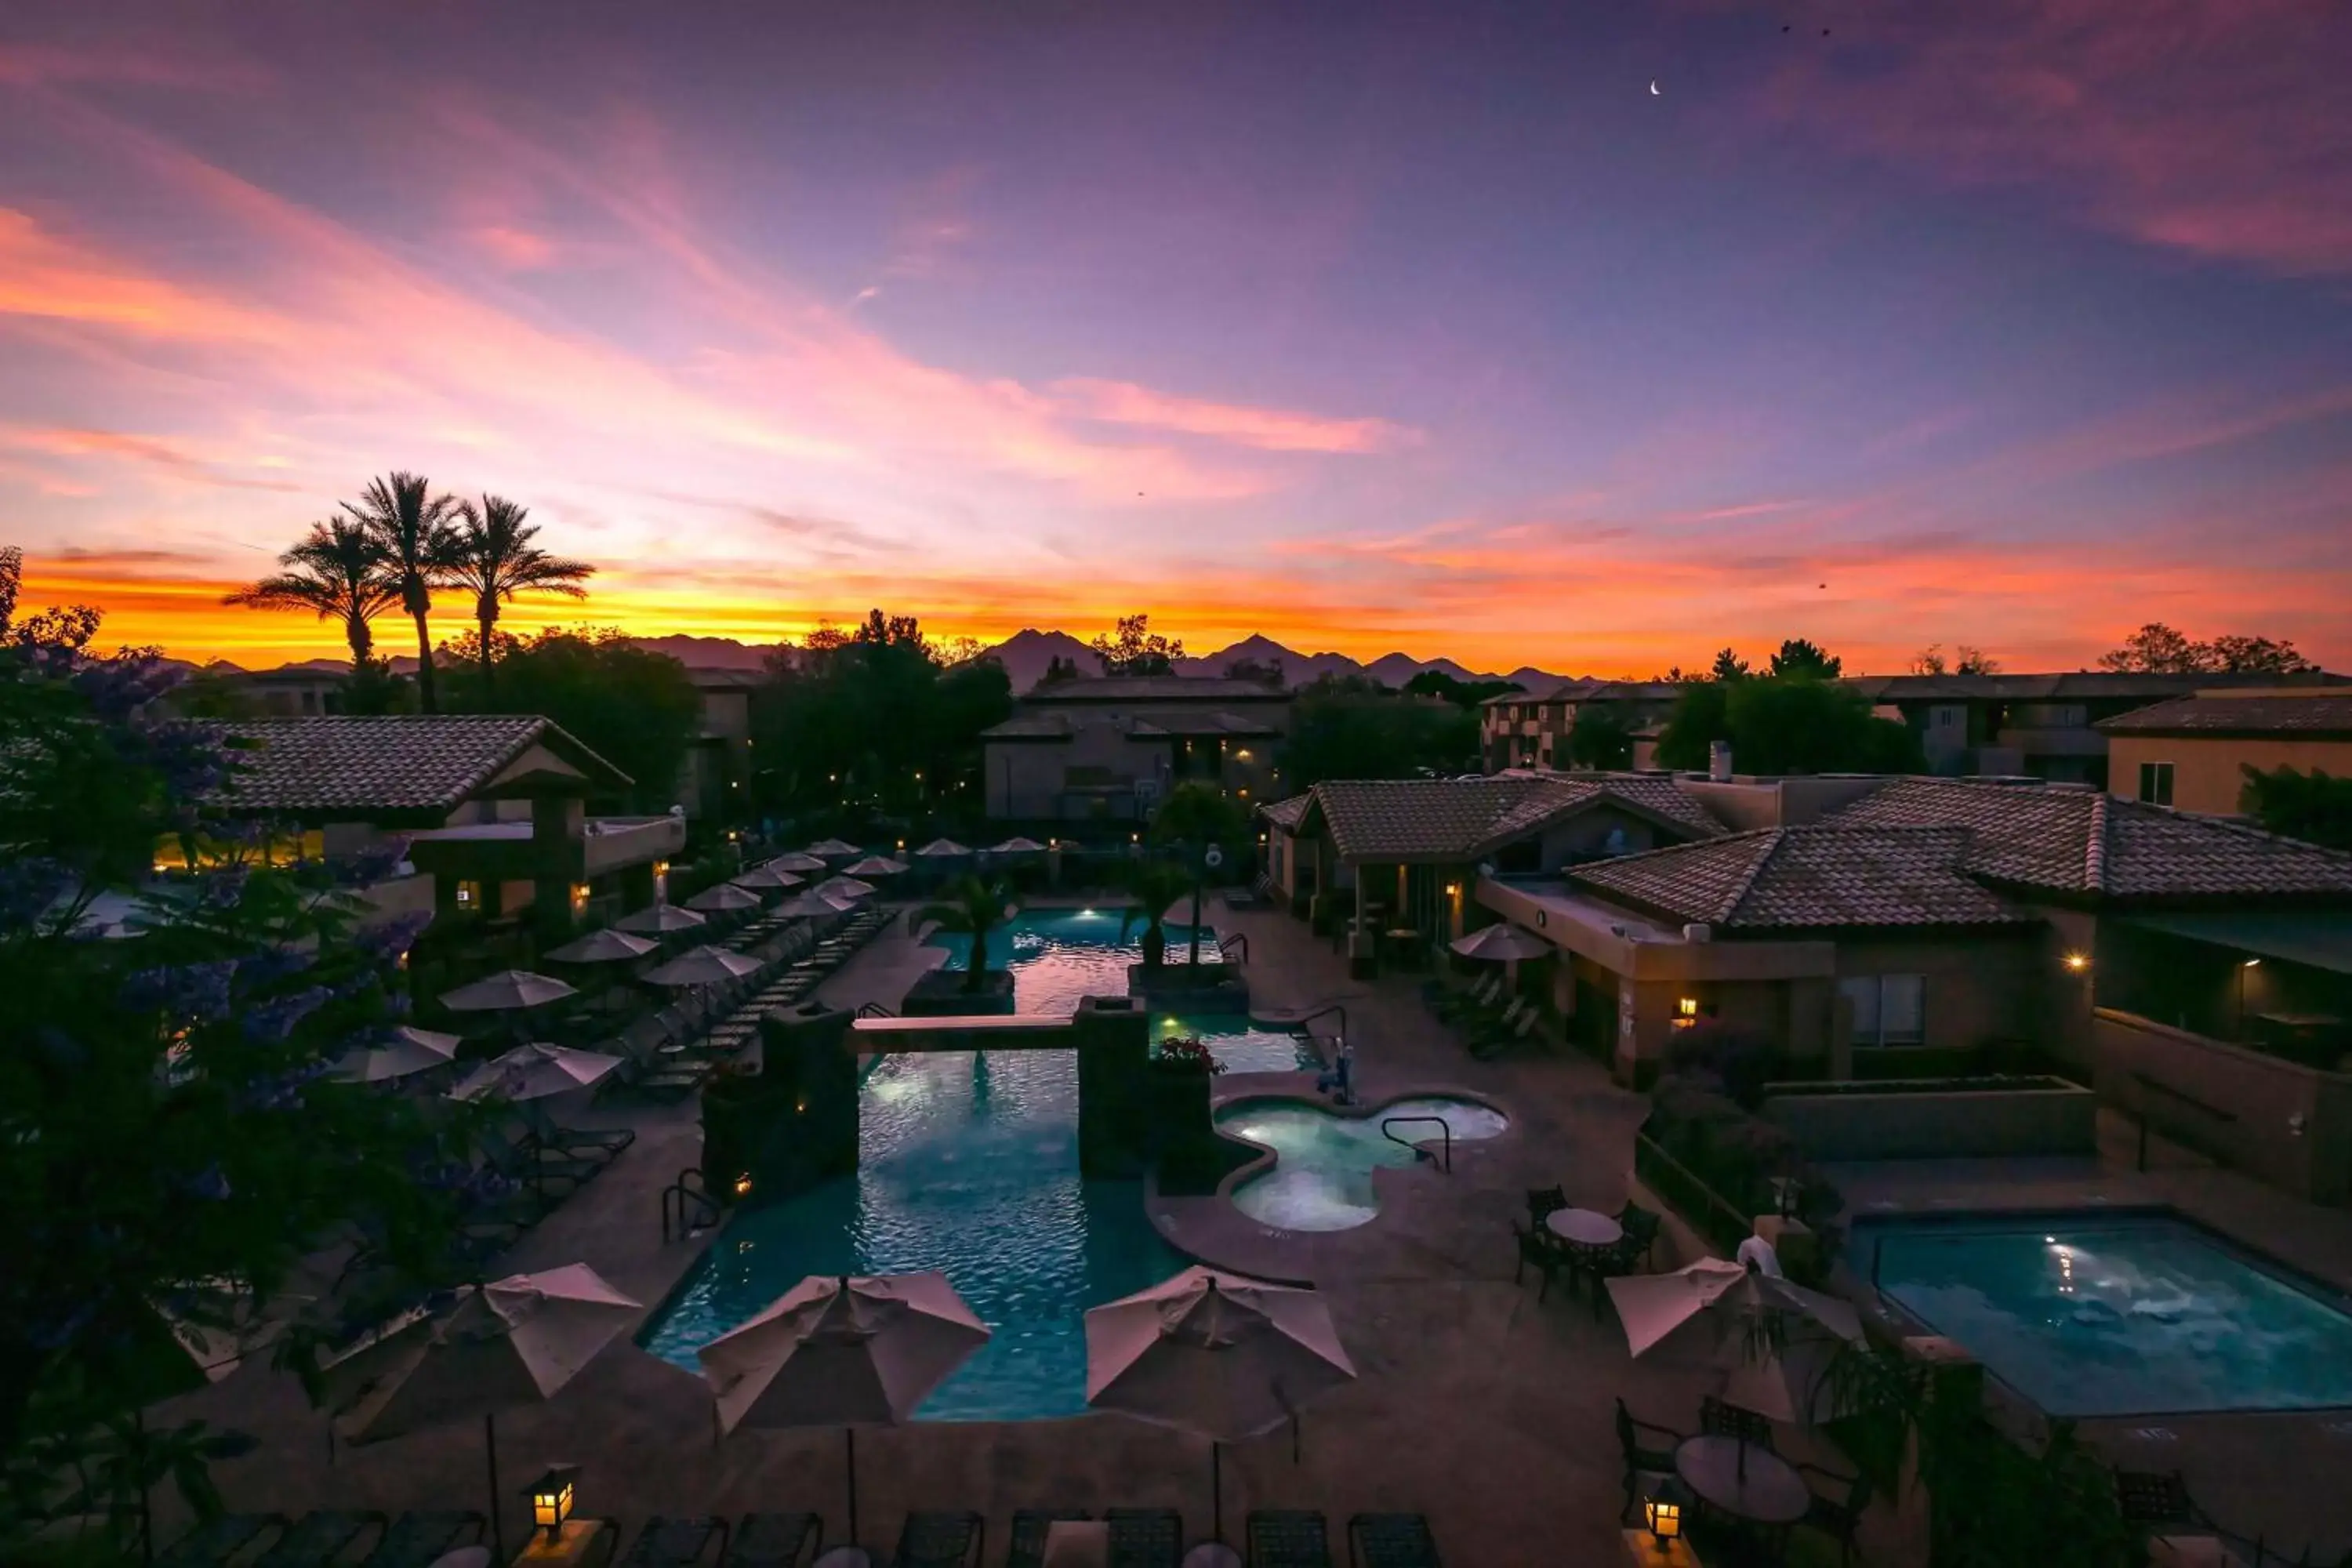 Pool view, Sunrise/Sunset in Hilton Vacation Club Scottsdale Villa Mirage